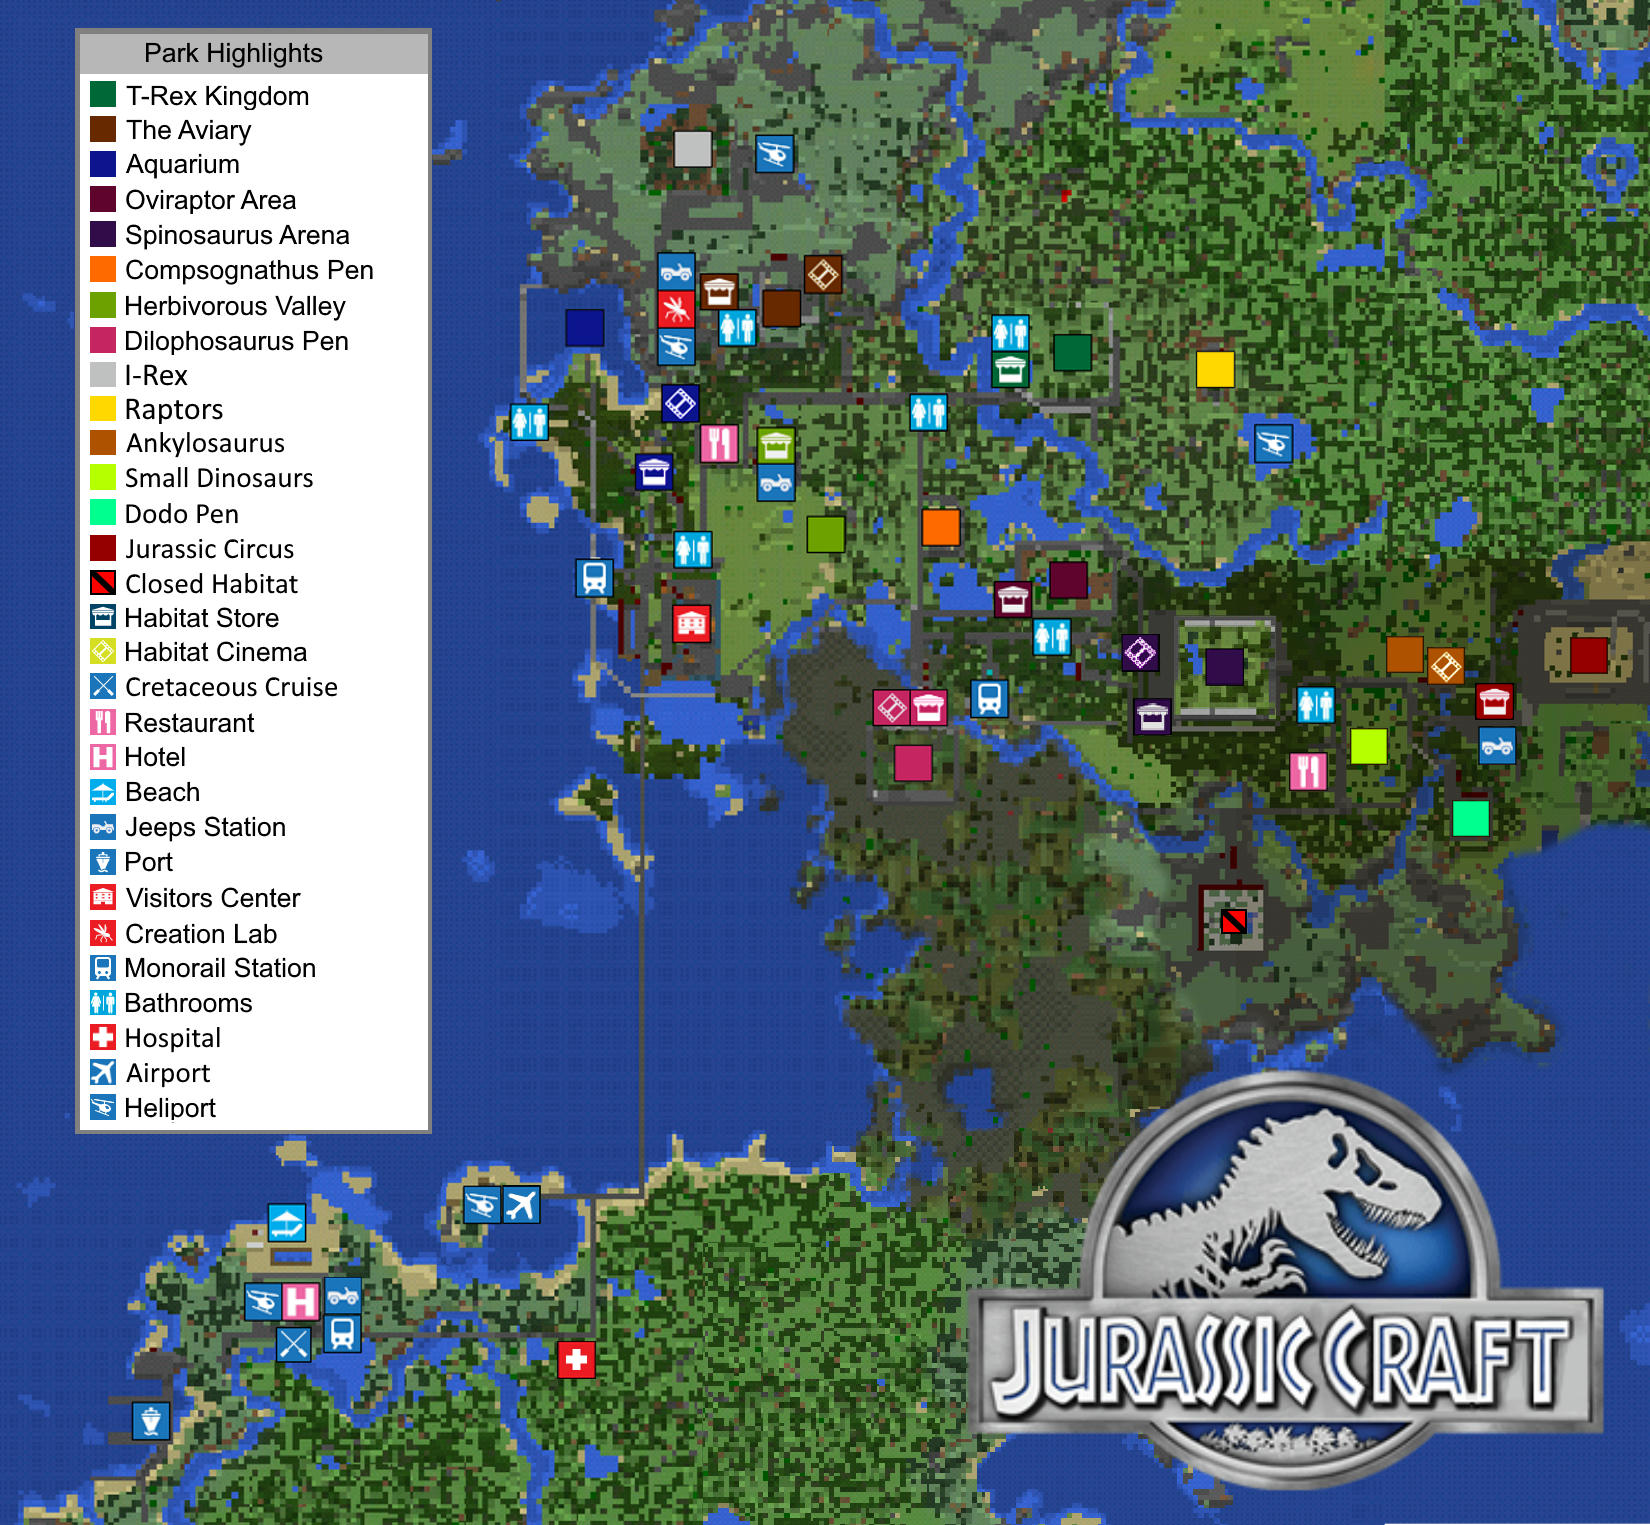 DINOSAURS - Minecraft Map